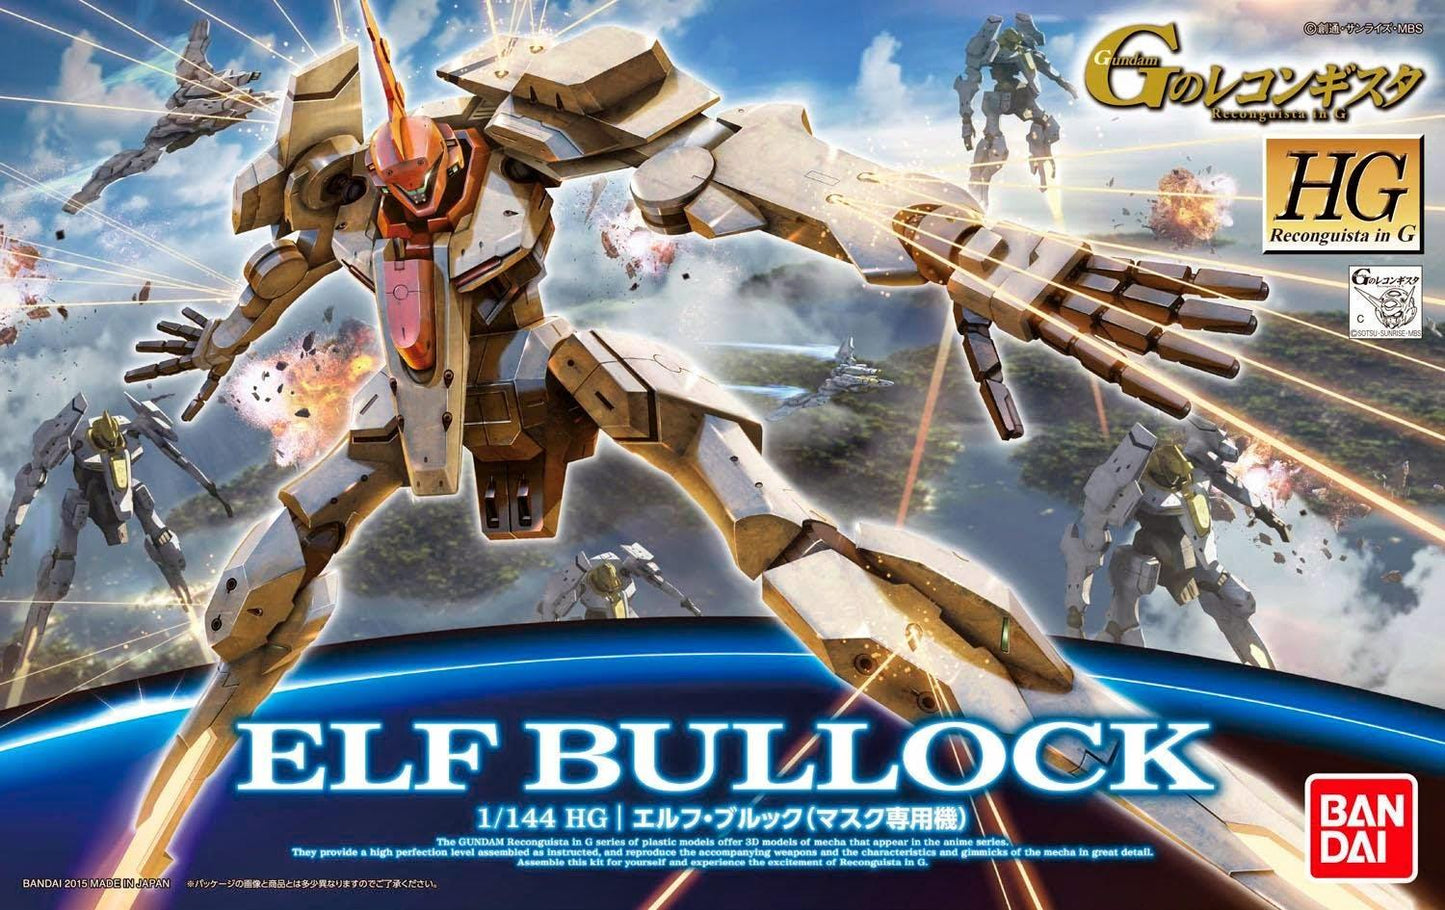 Gundam: Elf Bullock HG (Reconquista in G) Model